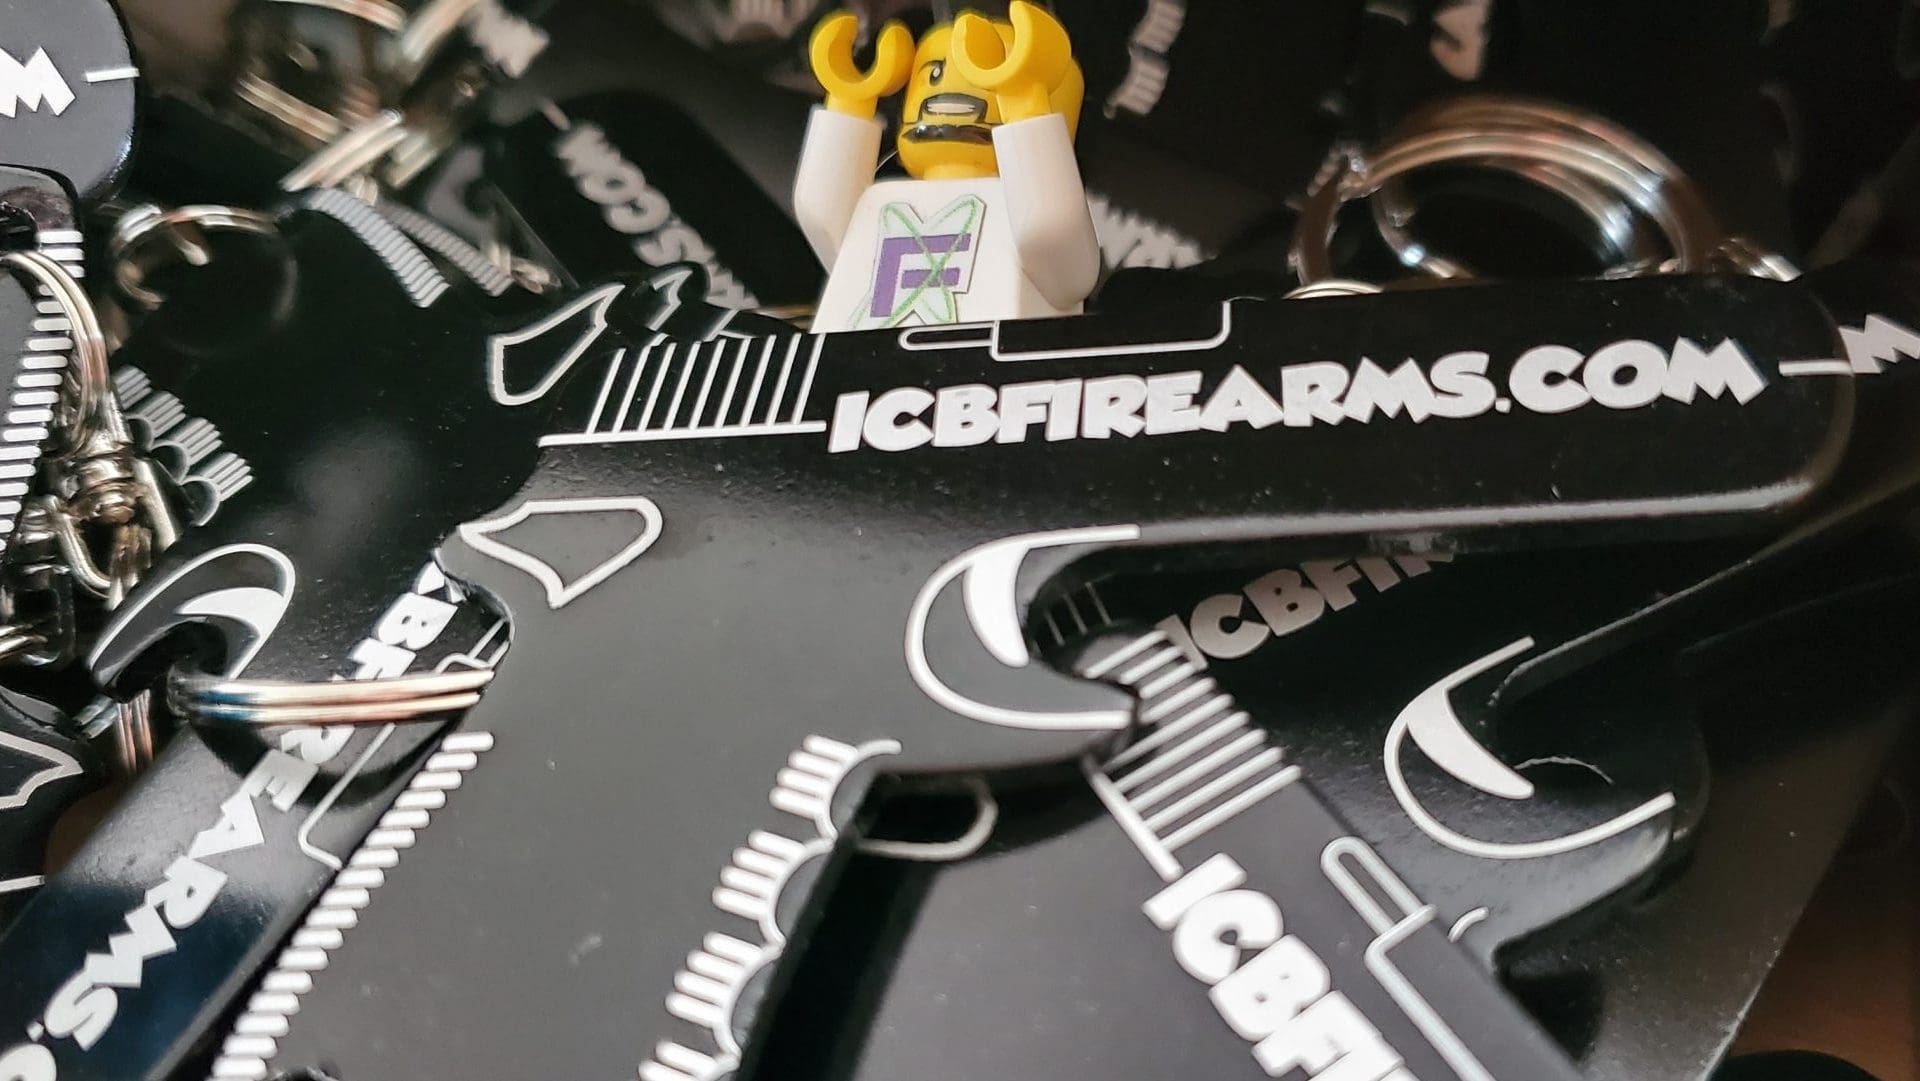 ICB Firearms - Gun Key chain Bottle Opener Lego Photo 06